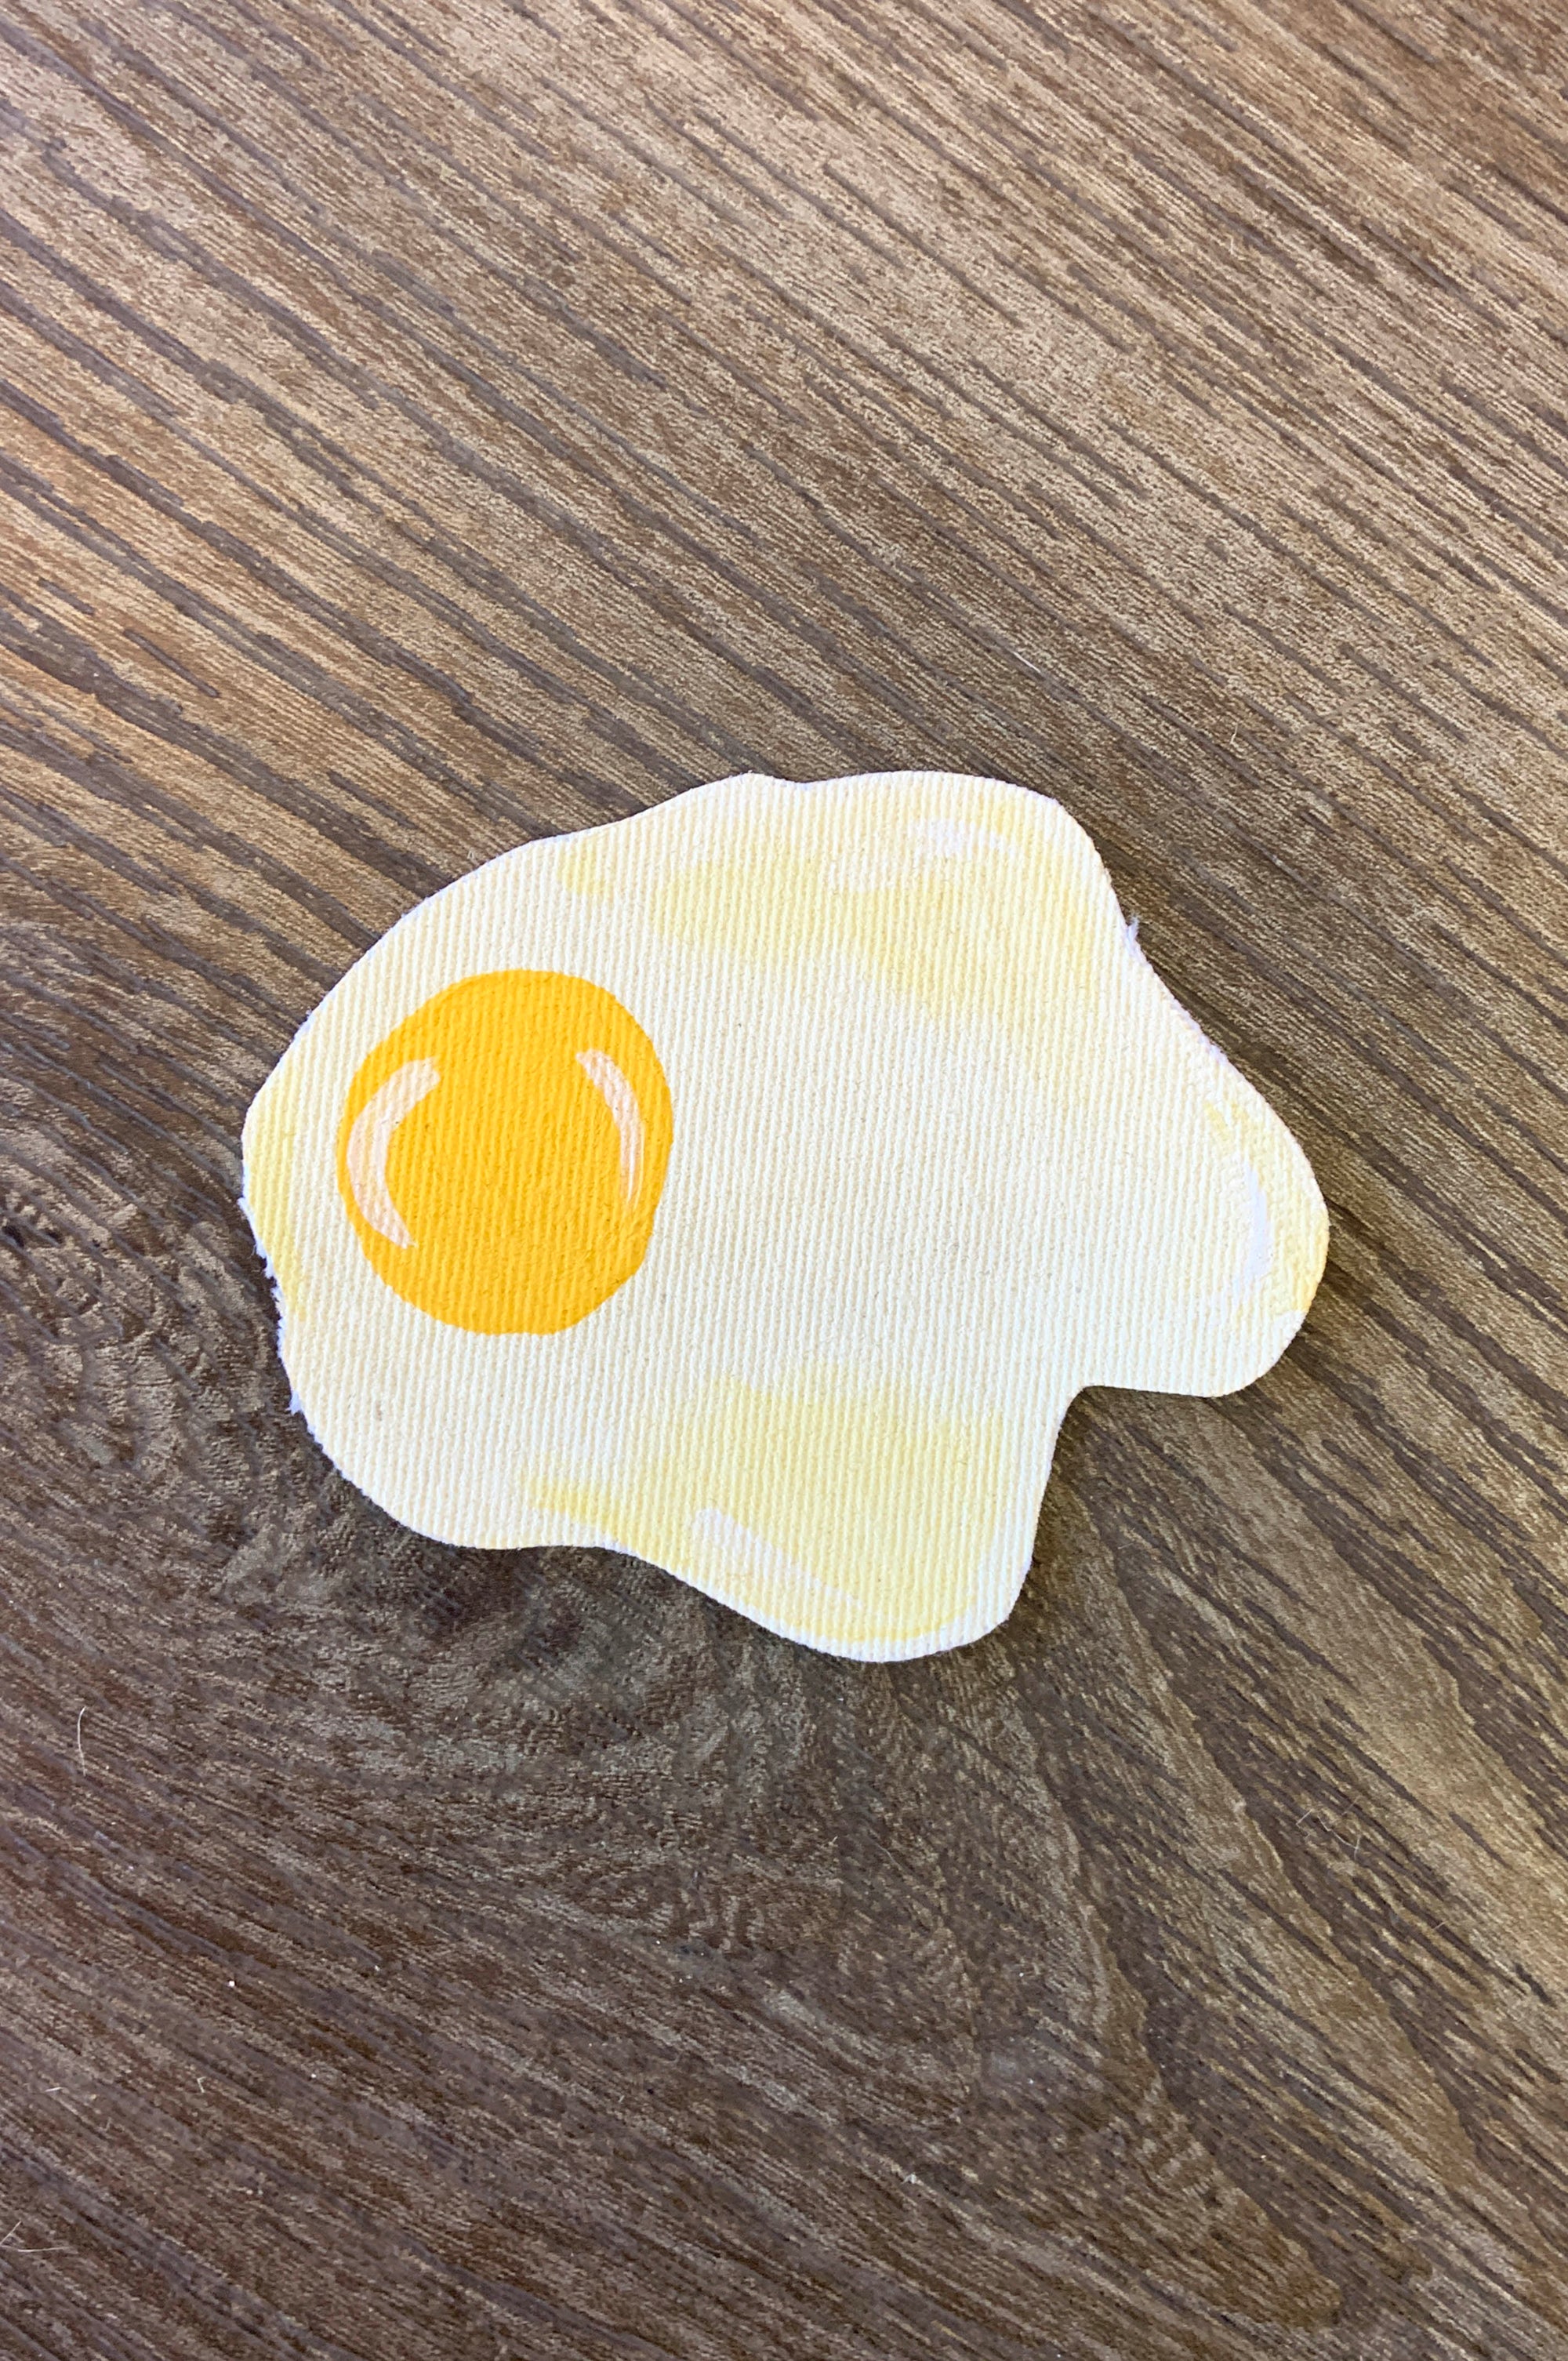 Sunnyside up Egg Patch